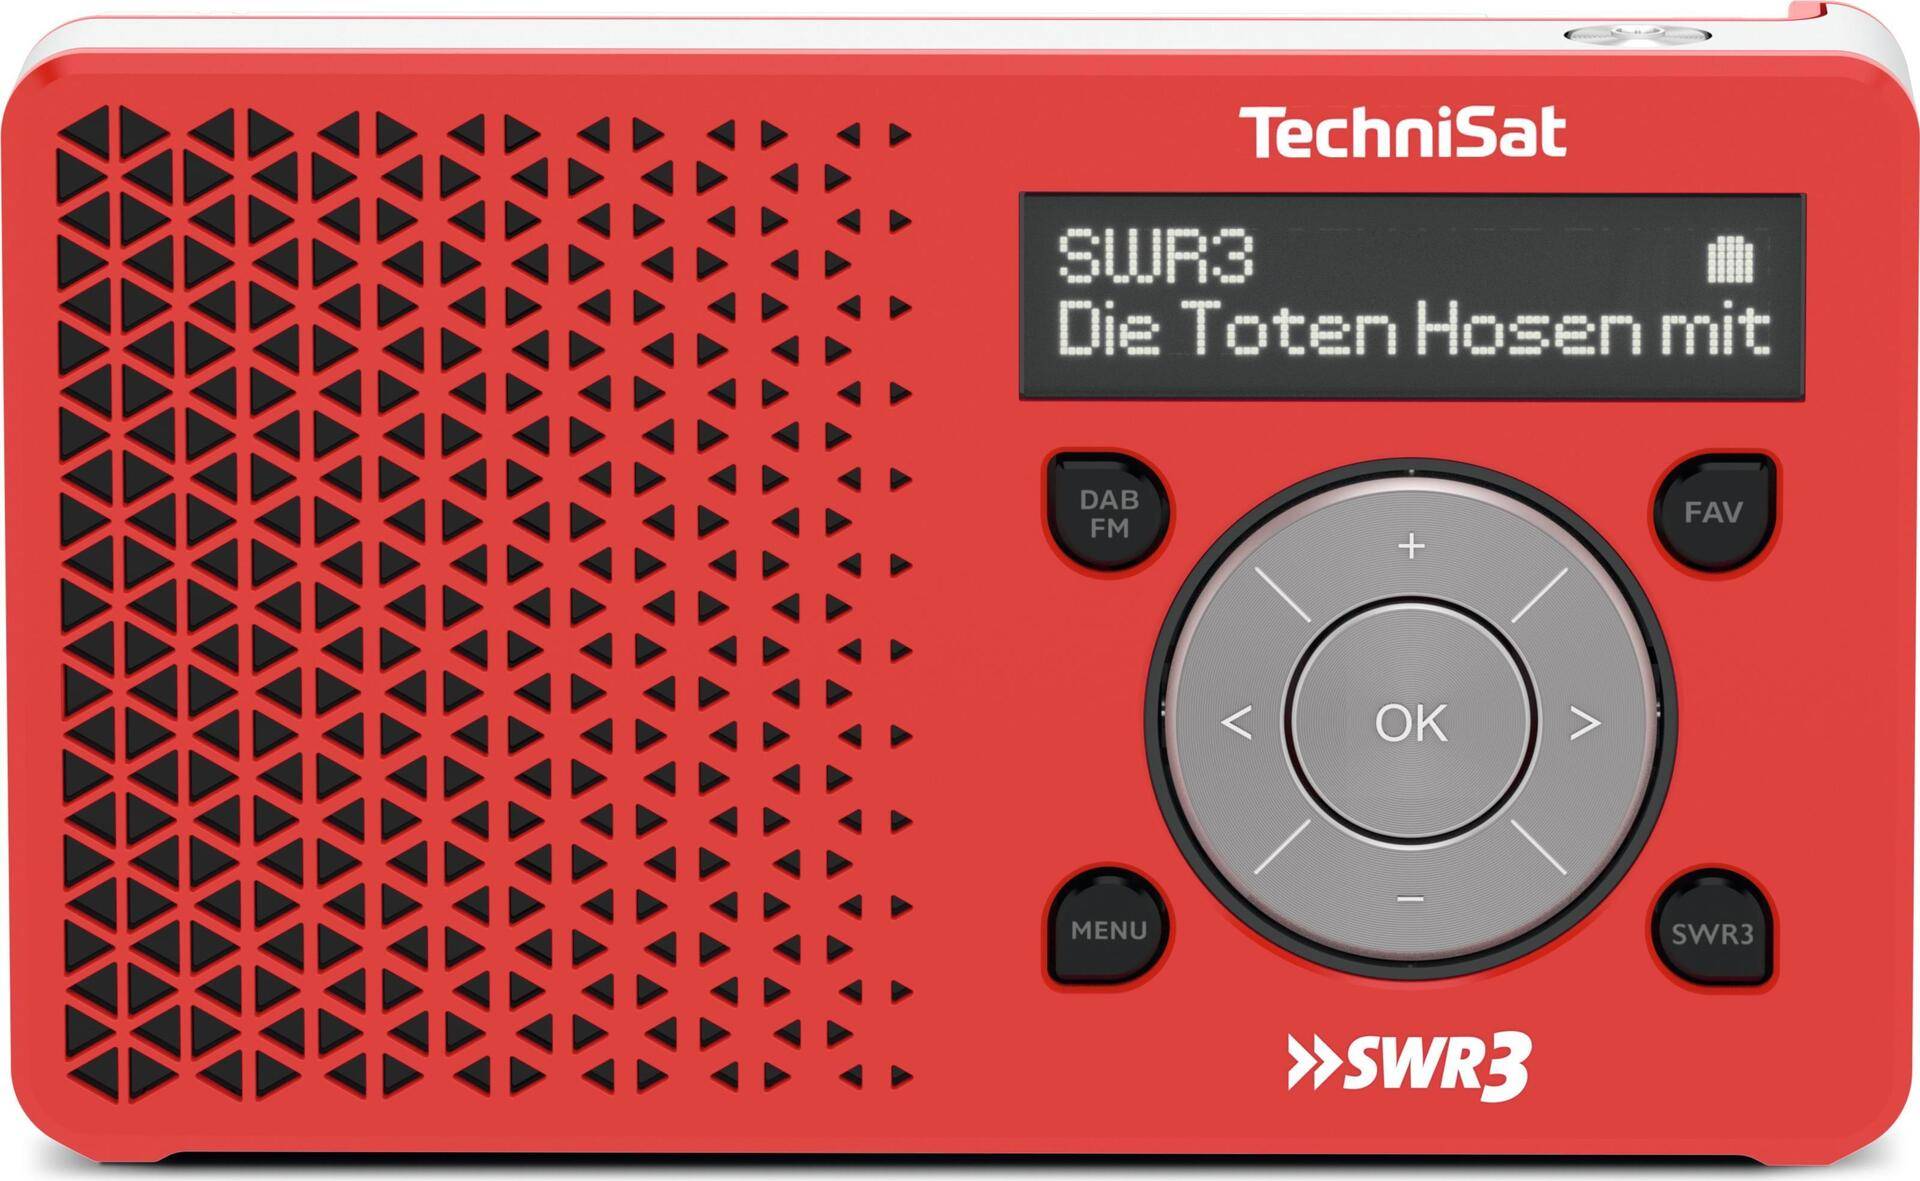 TechniSat DigitRadio 1 - SWR3 Edition - tragbares DAB-Radio - 1 Watt - Silber, Rot von Technisat